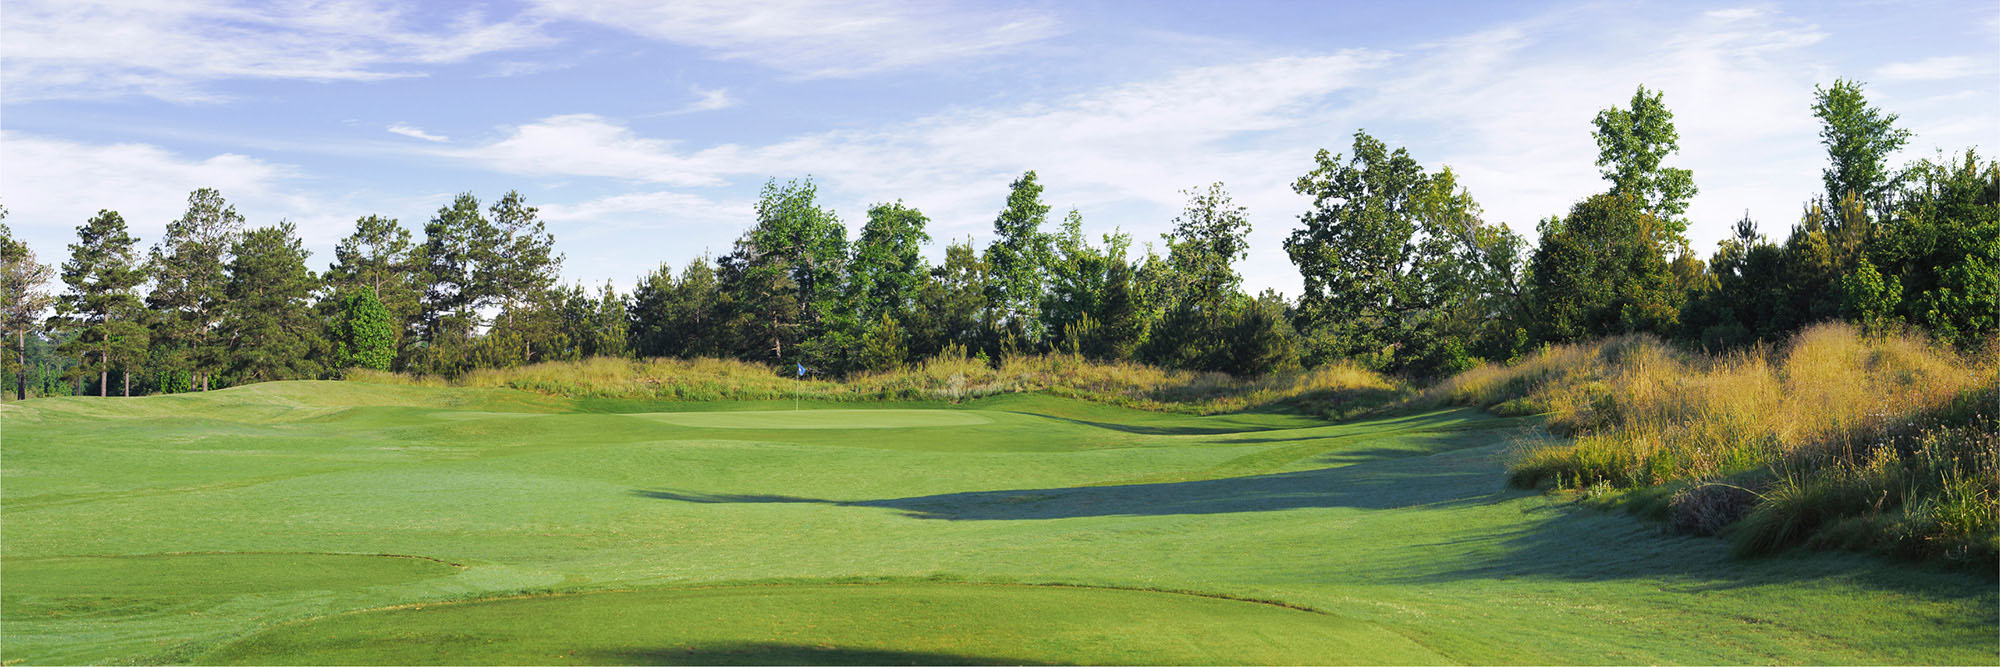 Golf Course Image - Canongate-Lake Windcrest Course No. 3